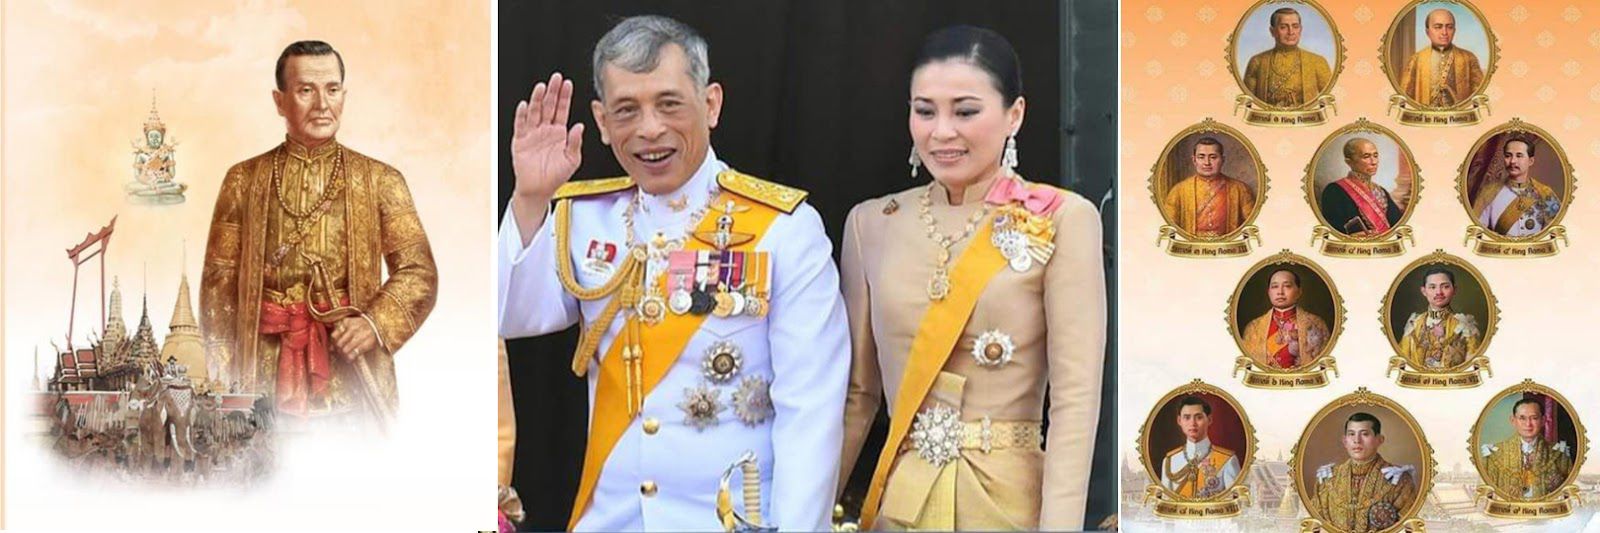 Royal Thai Jewels | The Diamond Talk | Renu Chaudhary